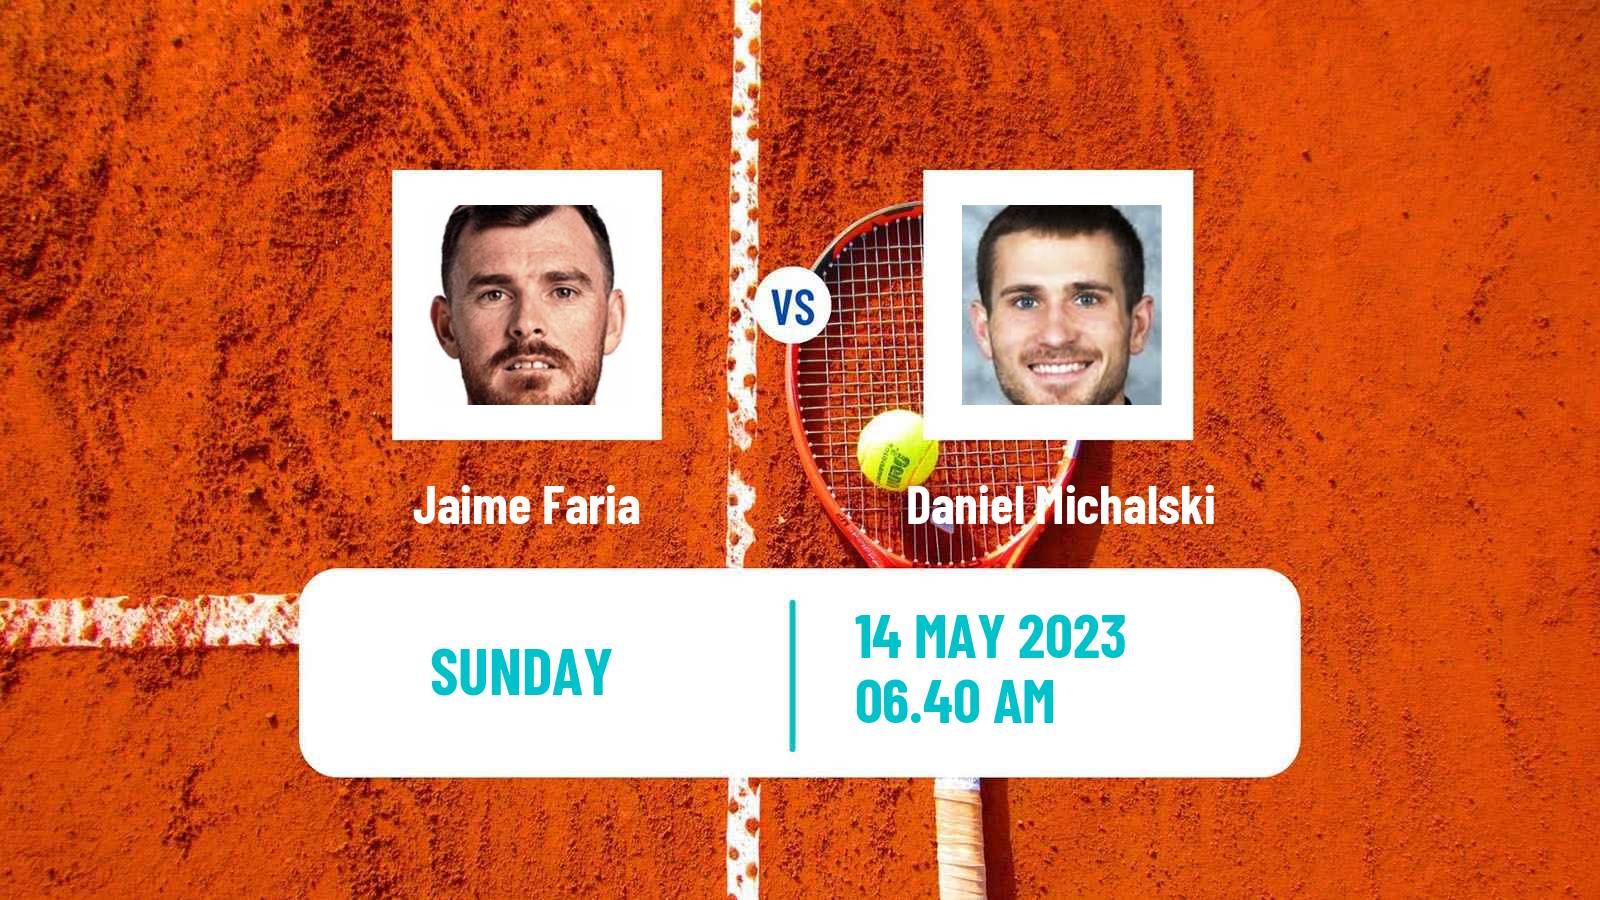 Tennis ATP Challenger Jaime Faria - Daniel Michalski